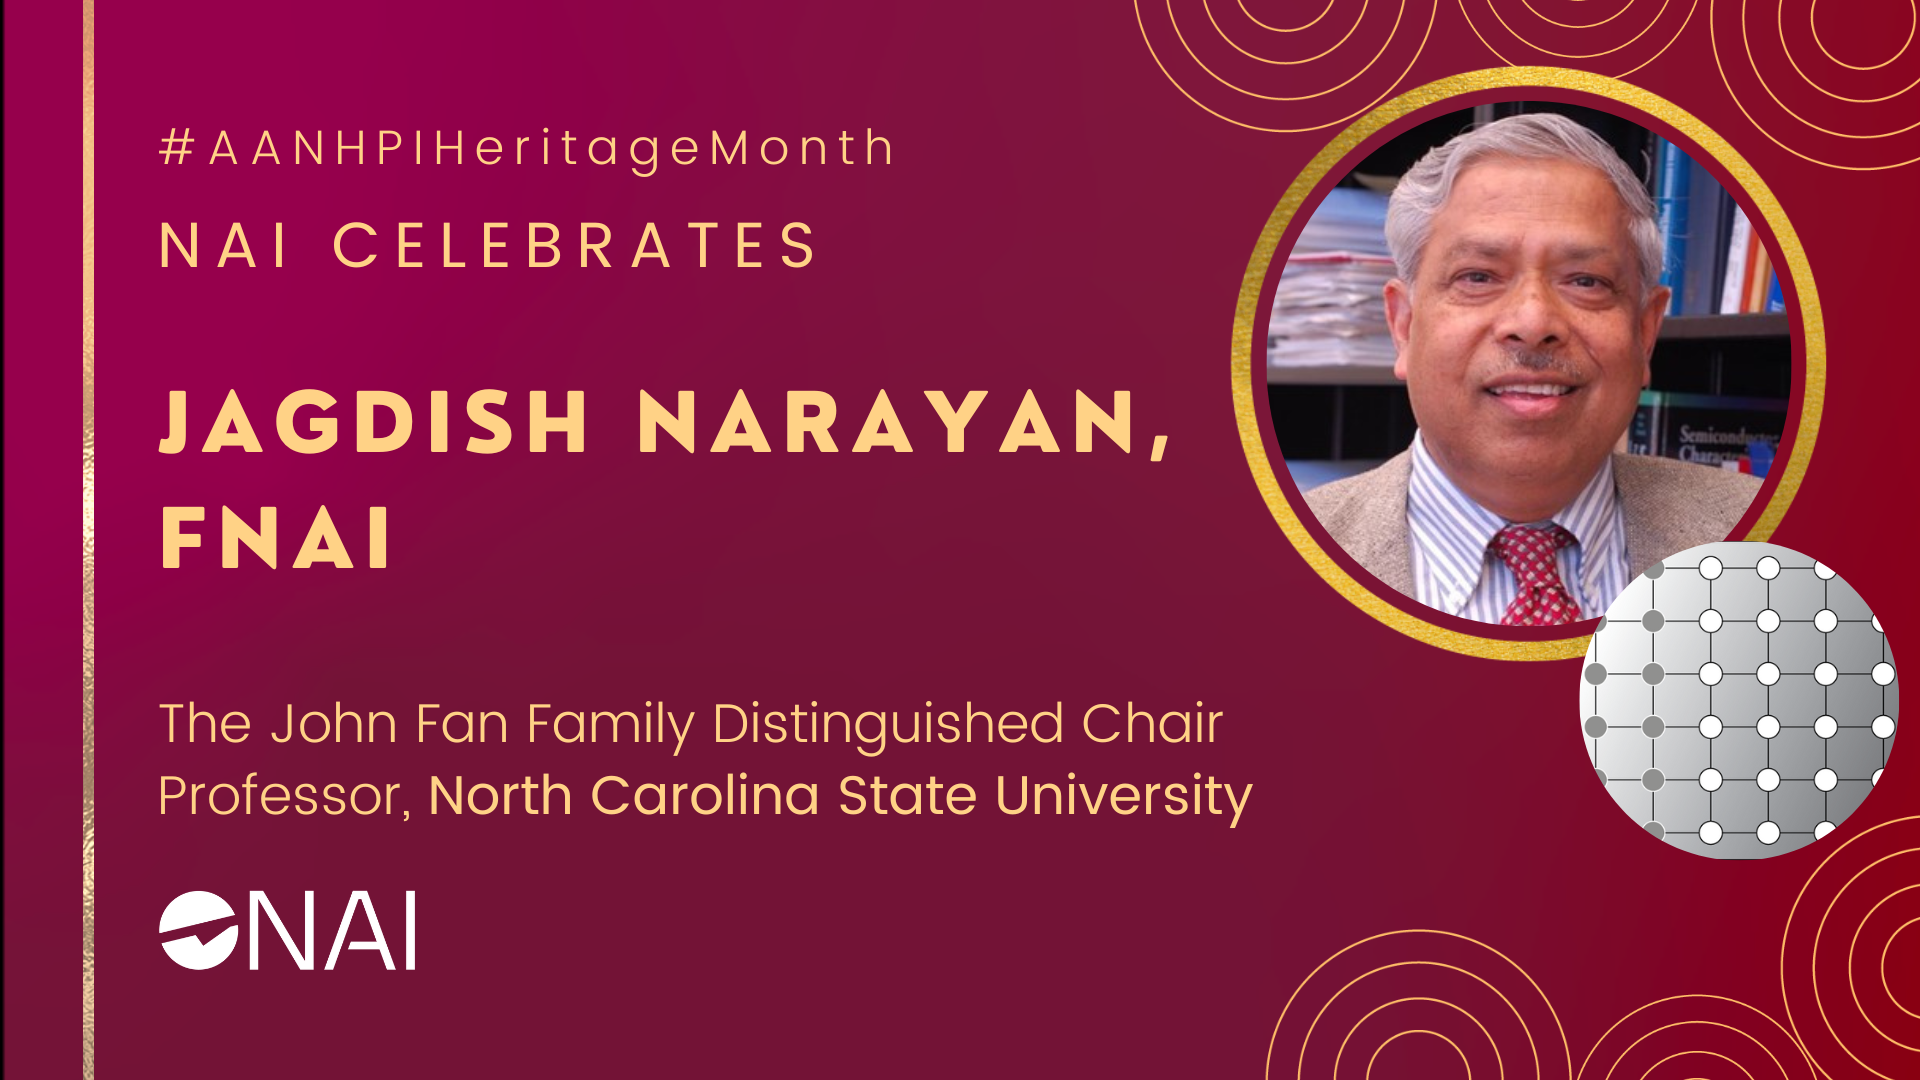 A graphic with a headshot of Jagdish Narayan with the text “#AANHPIHeritage Month NAI celebrates Jagdish Narayan, FNAI” followed by “The John Fan Family Distinguished Chair Professor, North Carolina State University”.